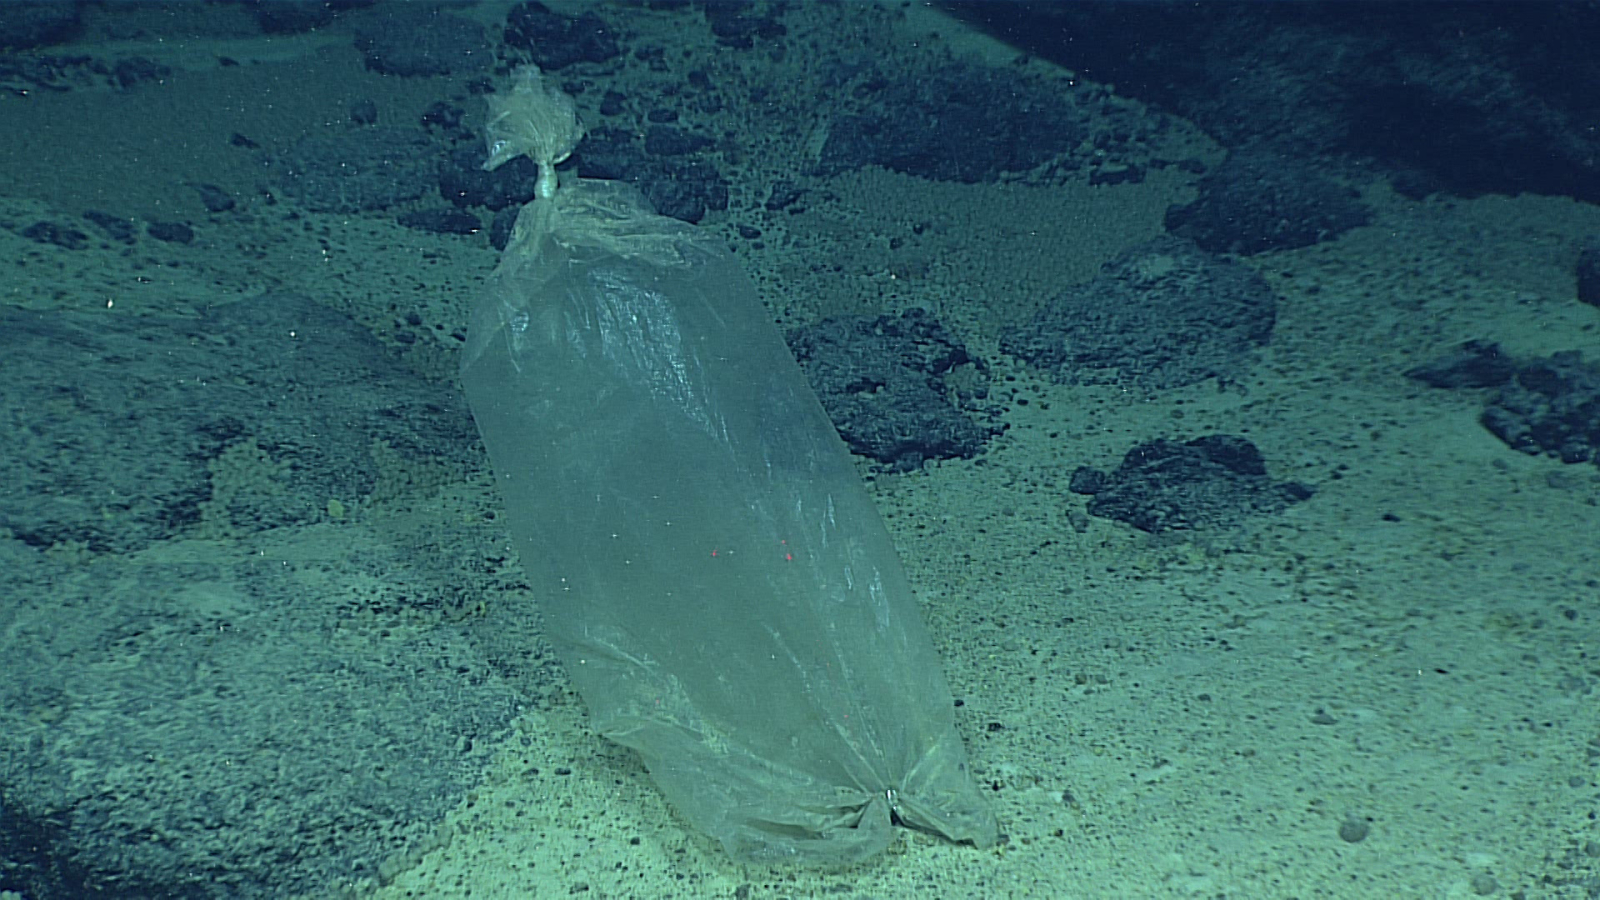 A plastic bag underwater.